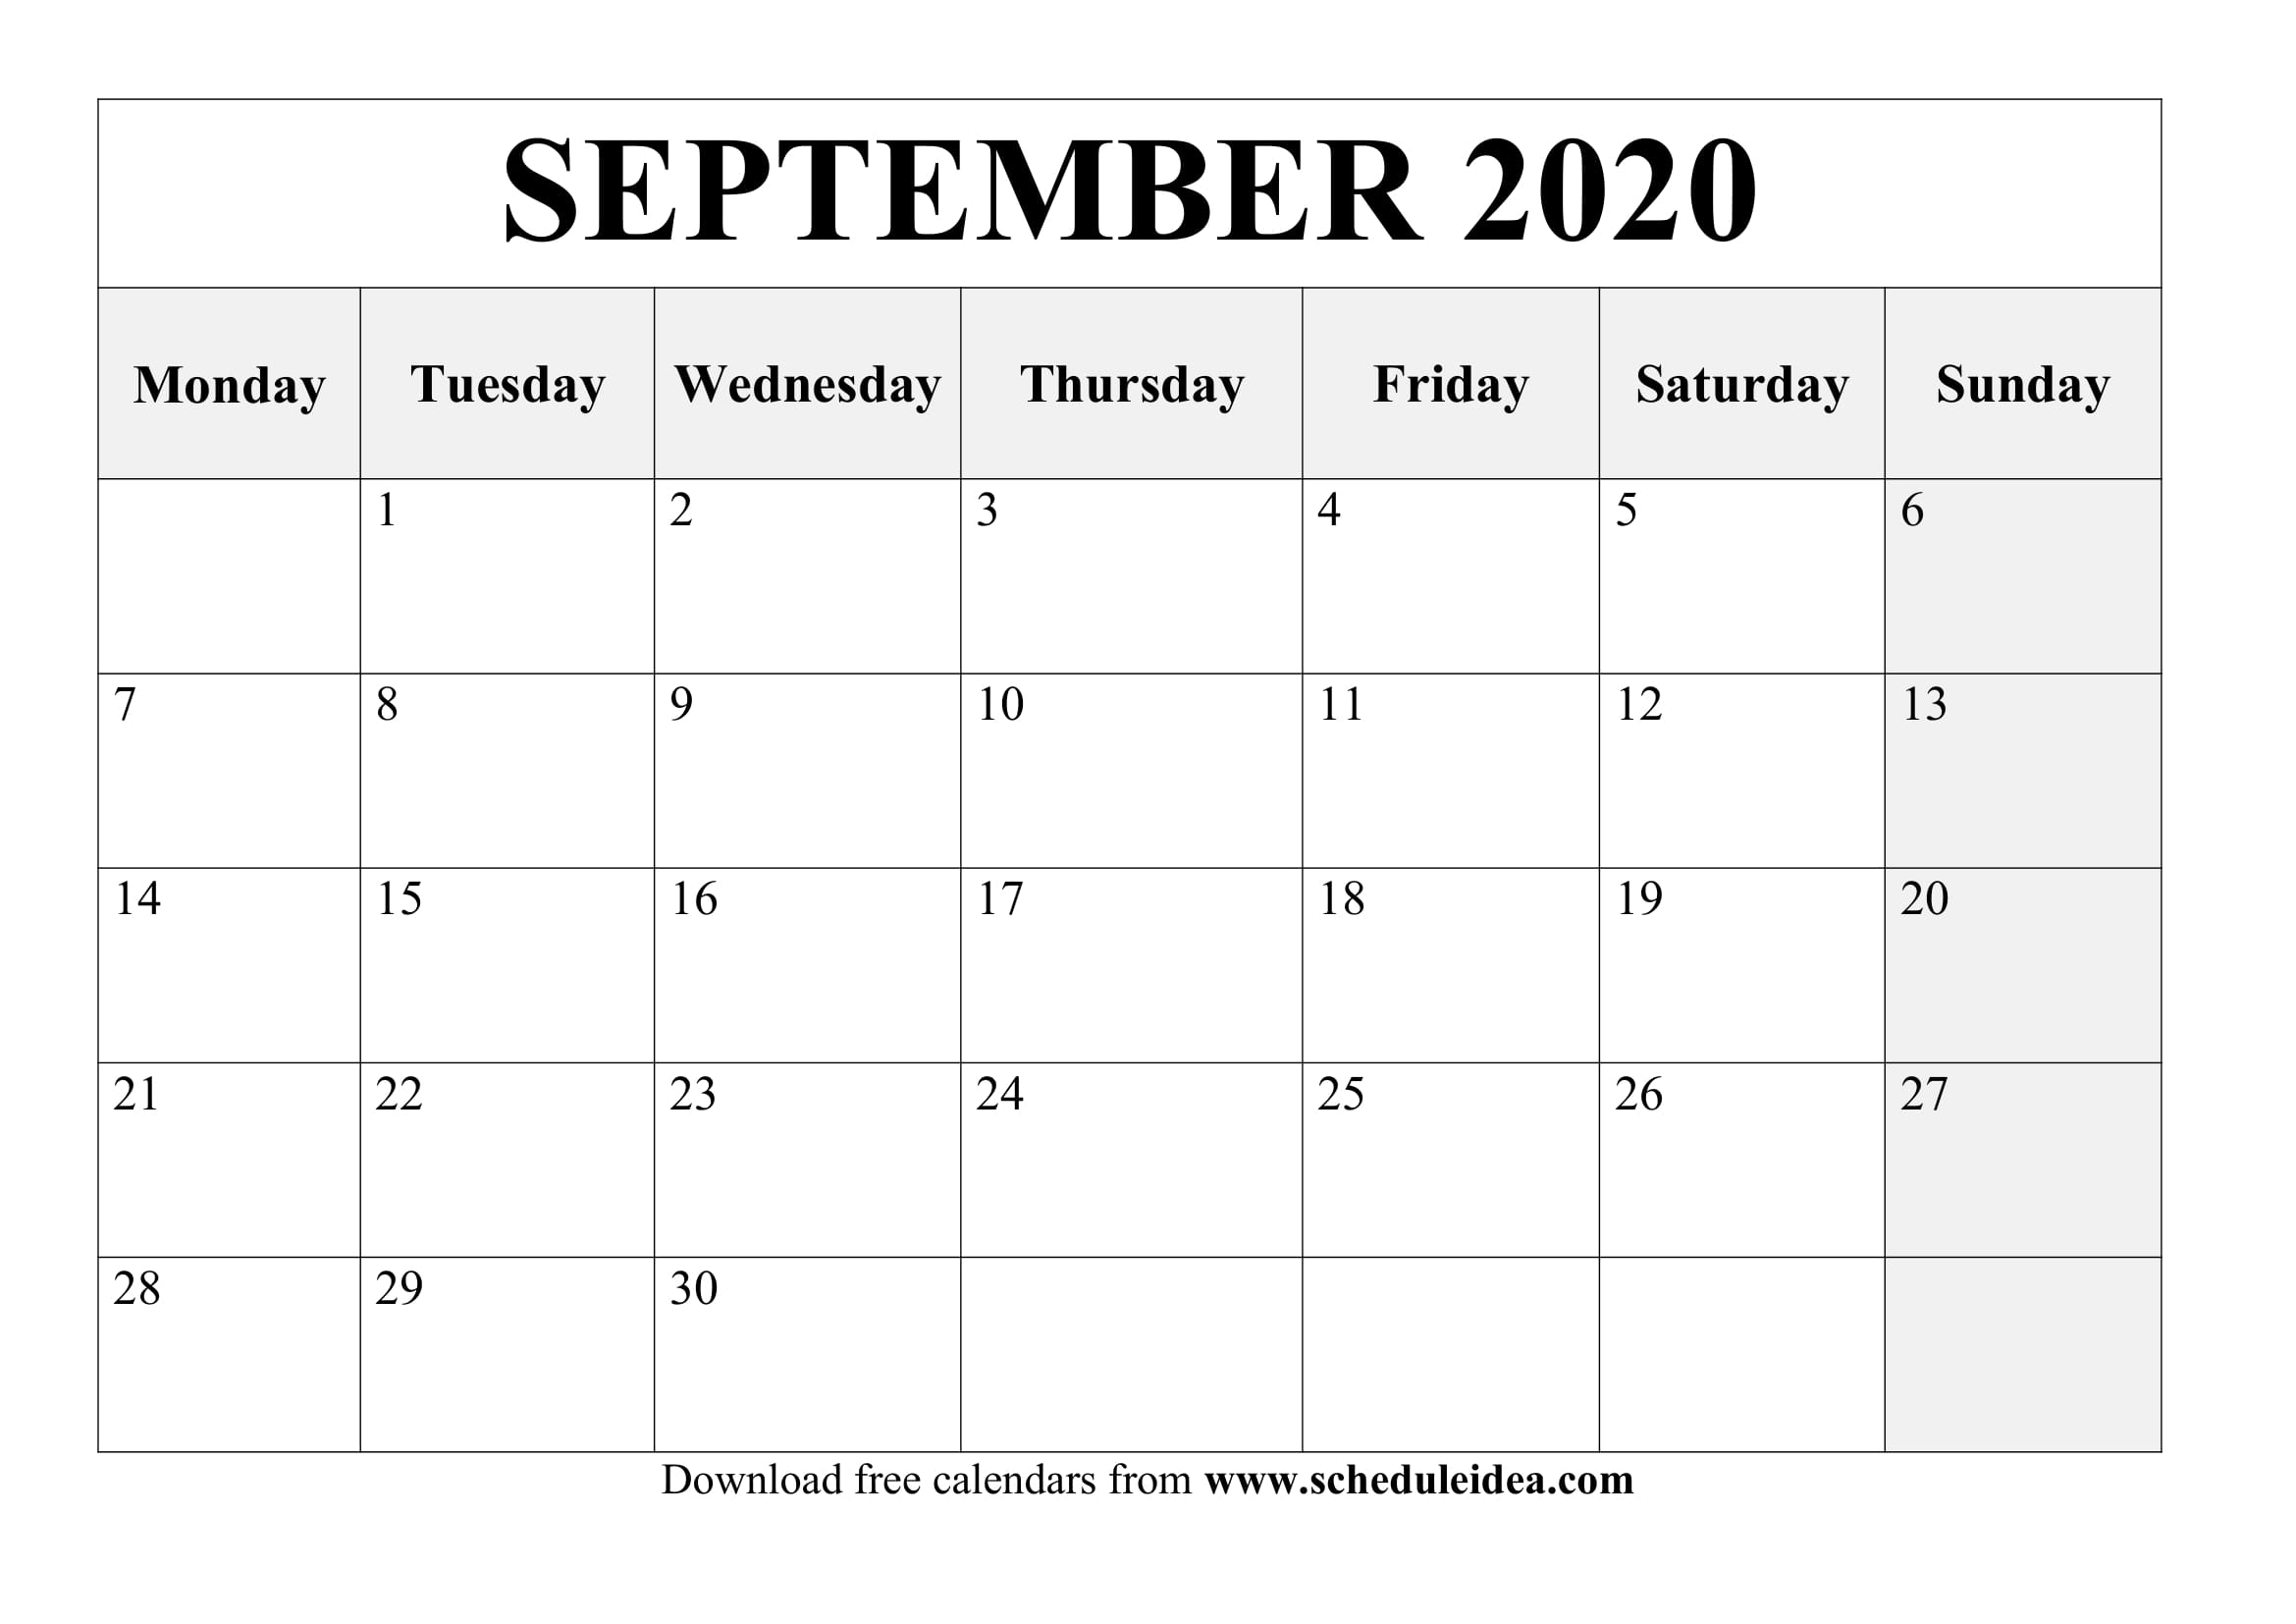 Printable September 2020 Calendar Template - Download Now